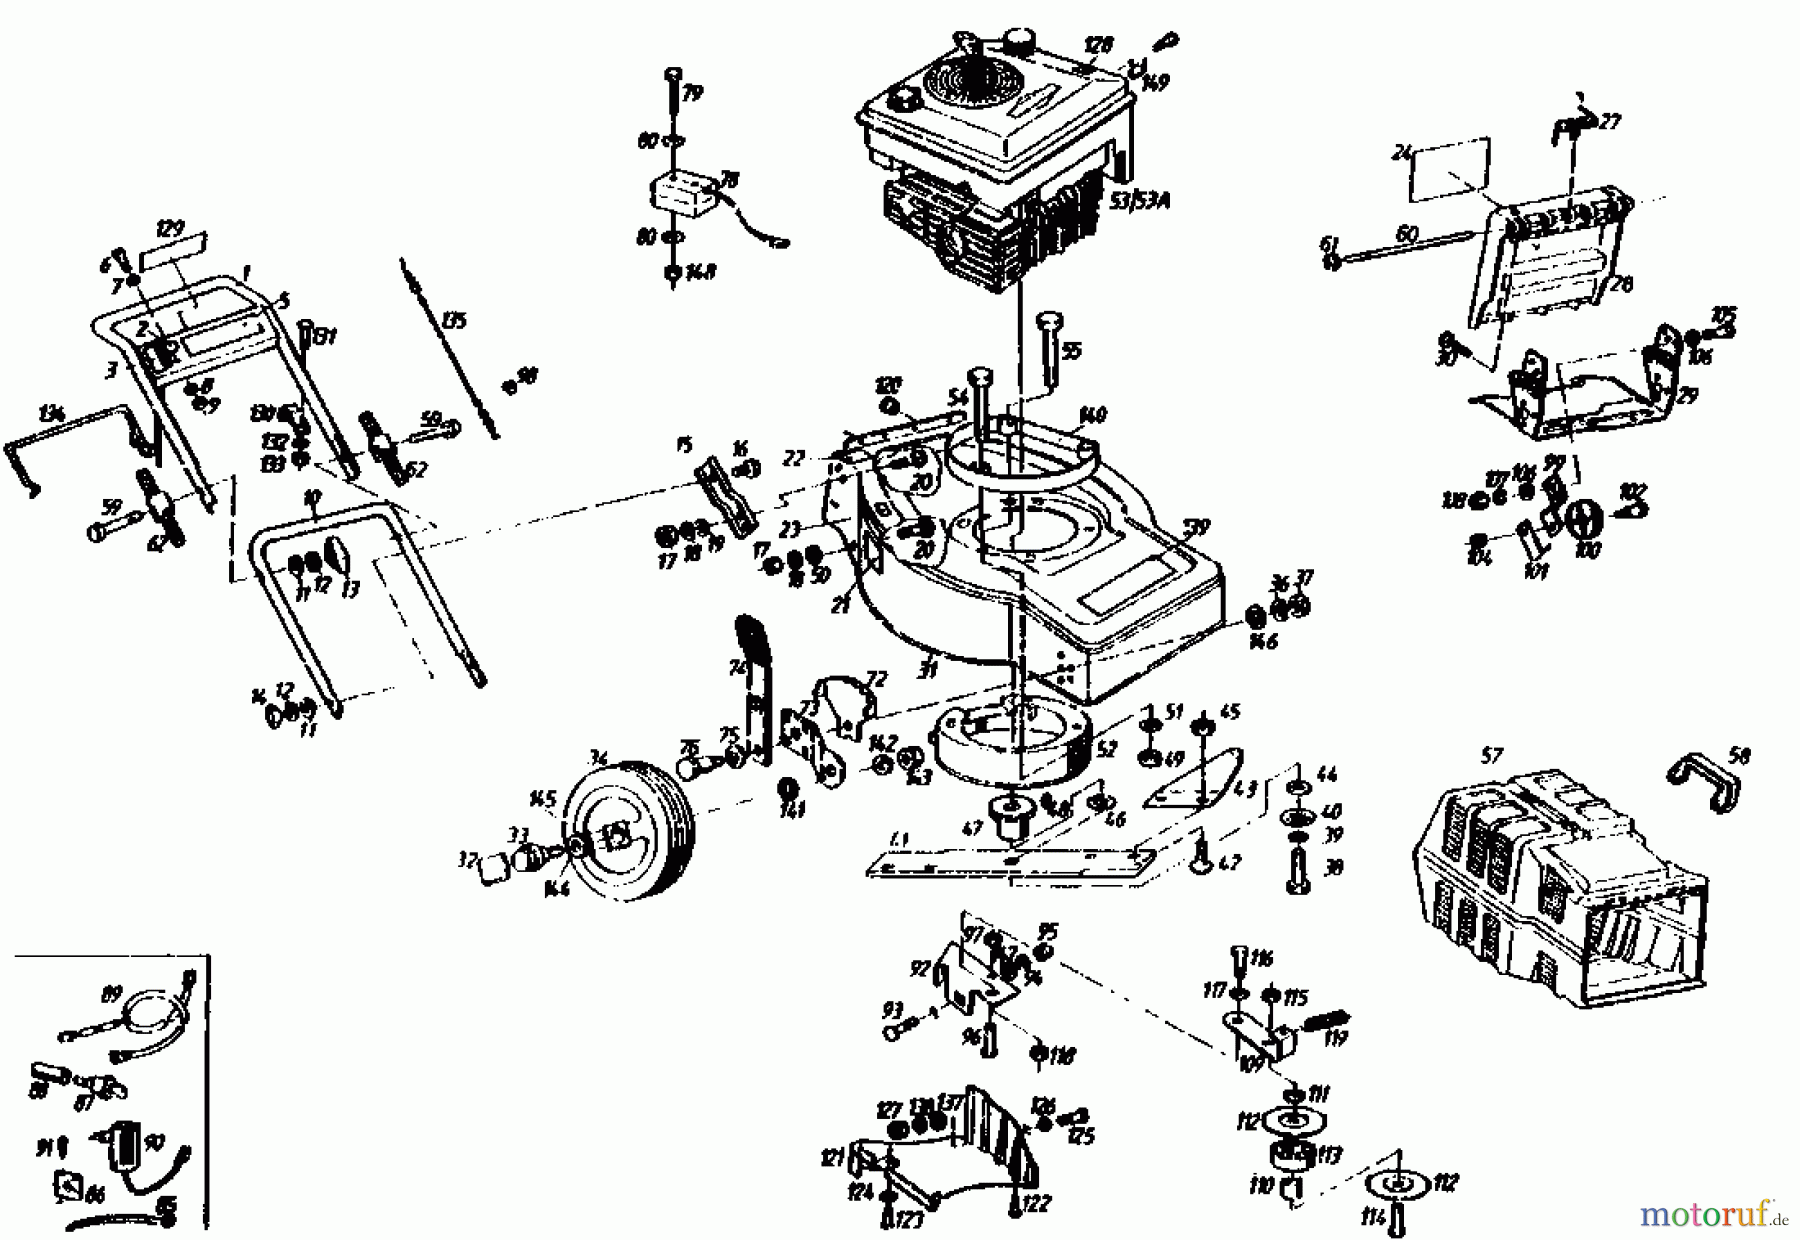  Gutbrod Petrol mower self propelled TURBO HBSR 04011.03  (1991) Basic machine